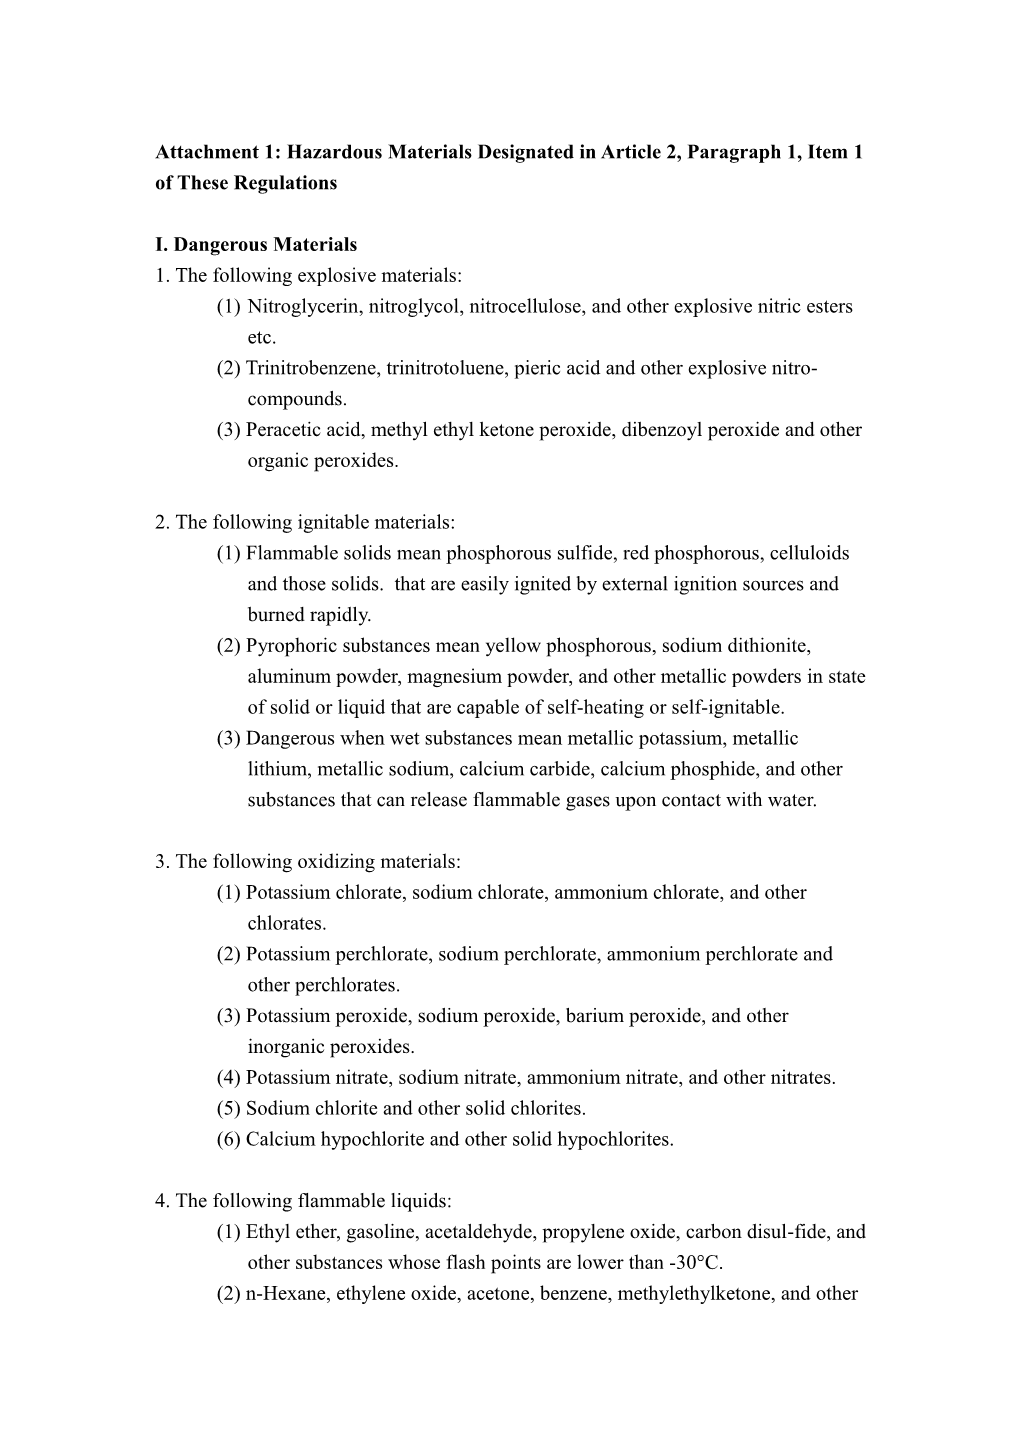 Attachment 1: Hazardous Materials Designated in Article 2, Paragraph 1, Item 1 of These